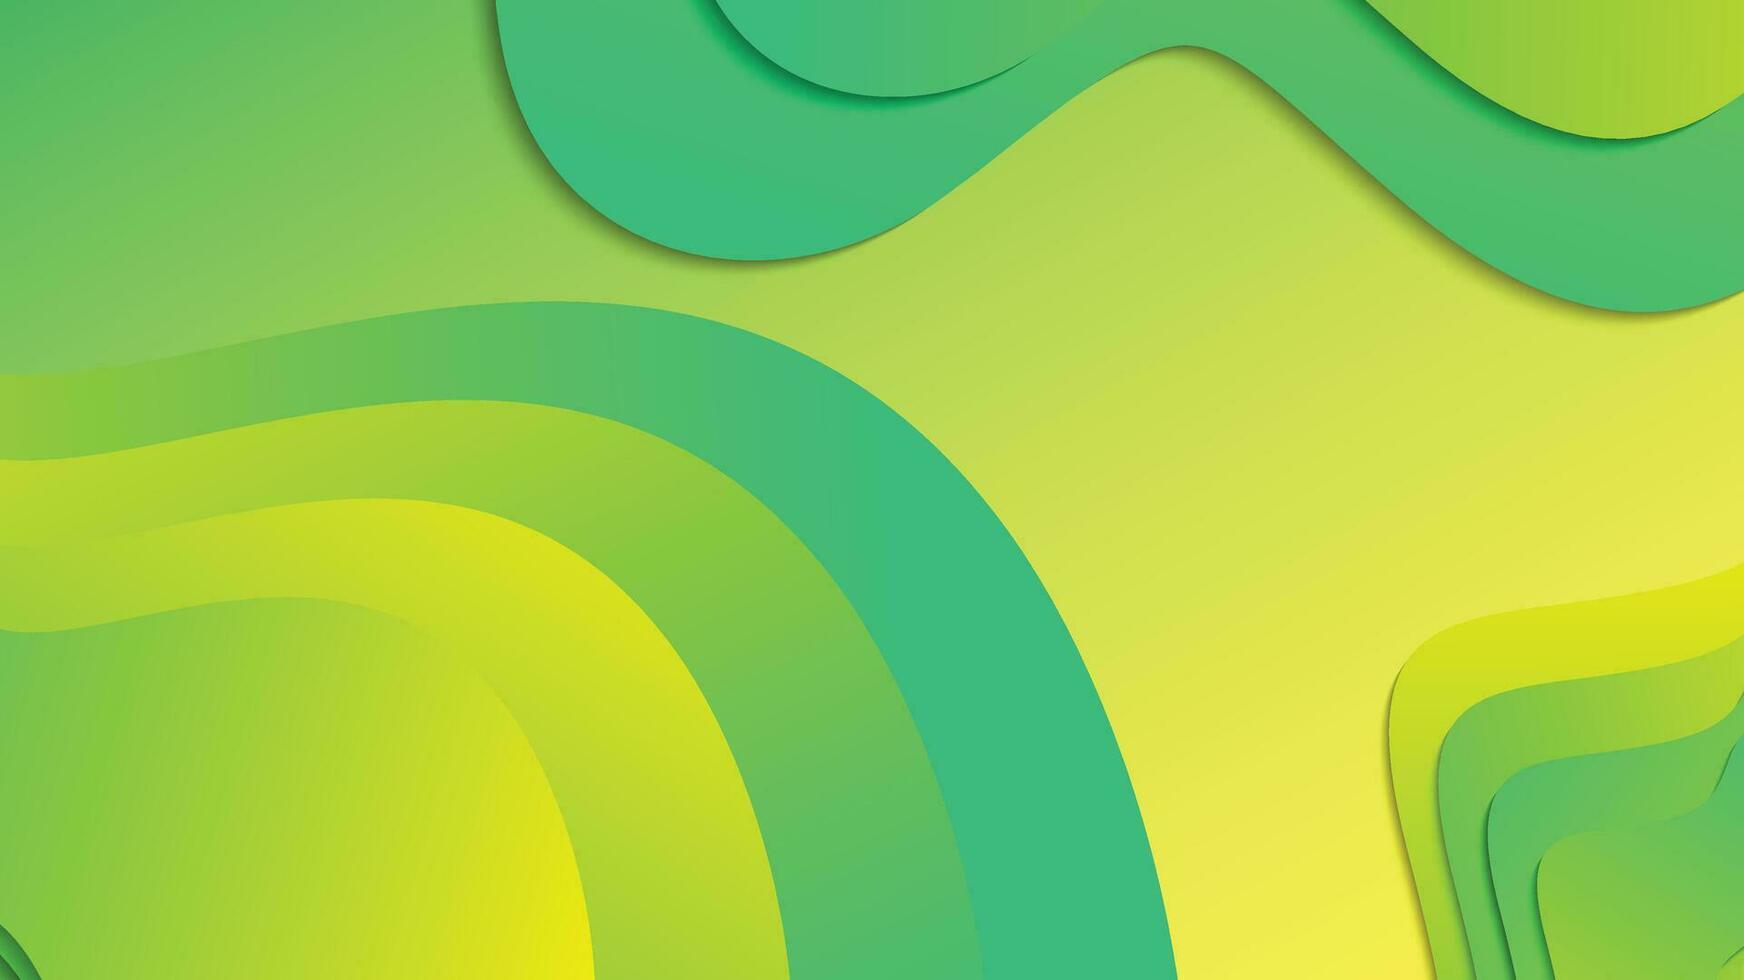 verde e amarelo gradiente fluido onda abstrato fundo vetor